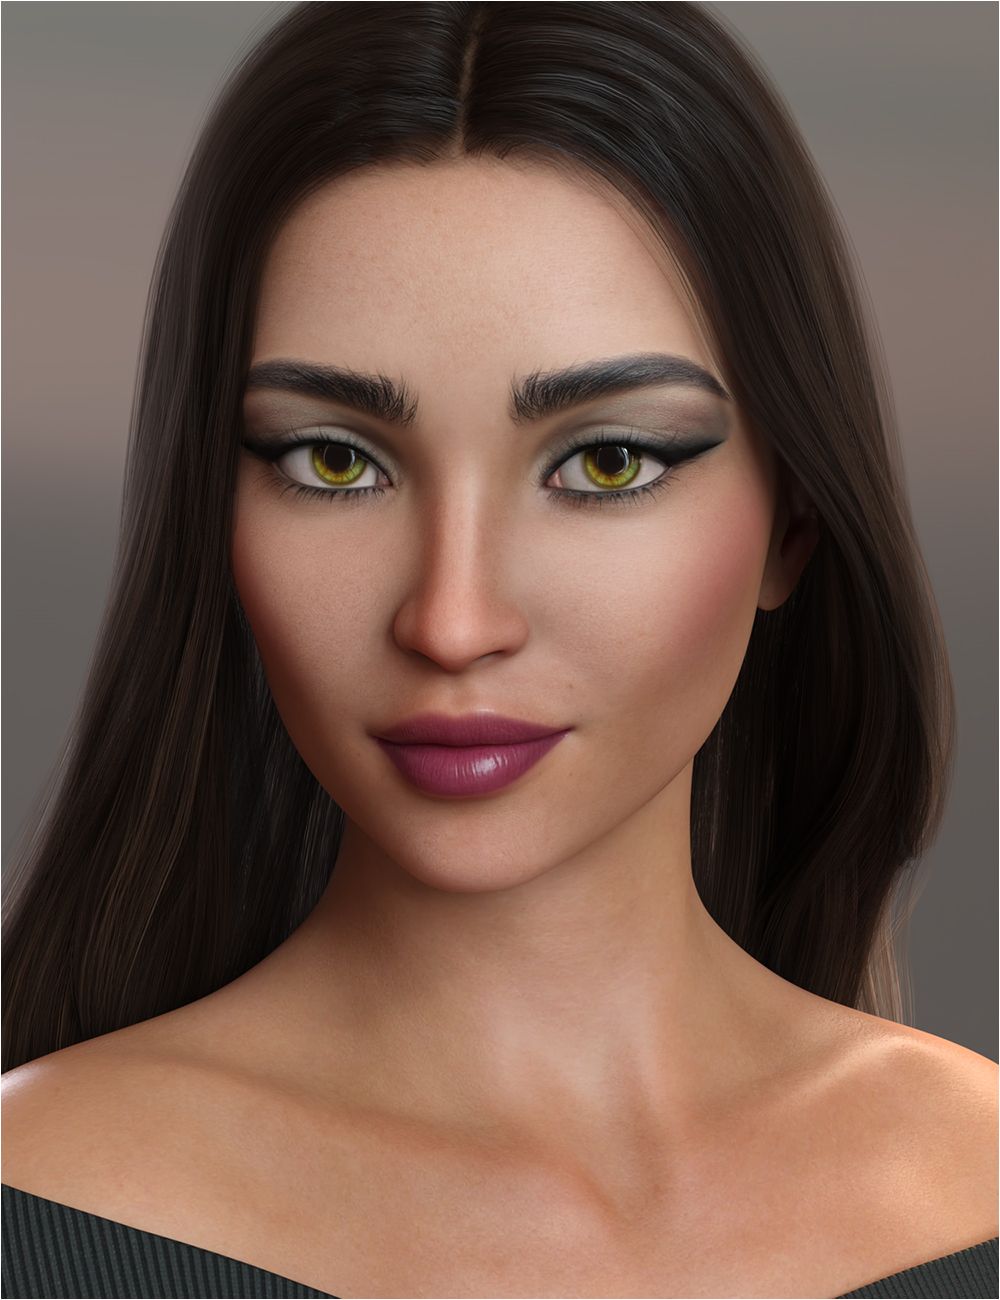 Prudie for Genesis 8.1 Female by: OziChickhotlilme74, 3D Models by Daz 3D